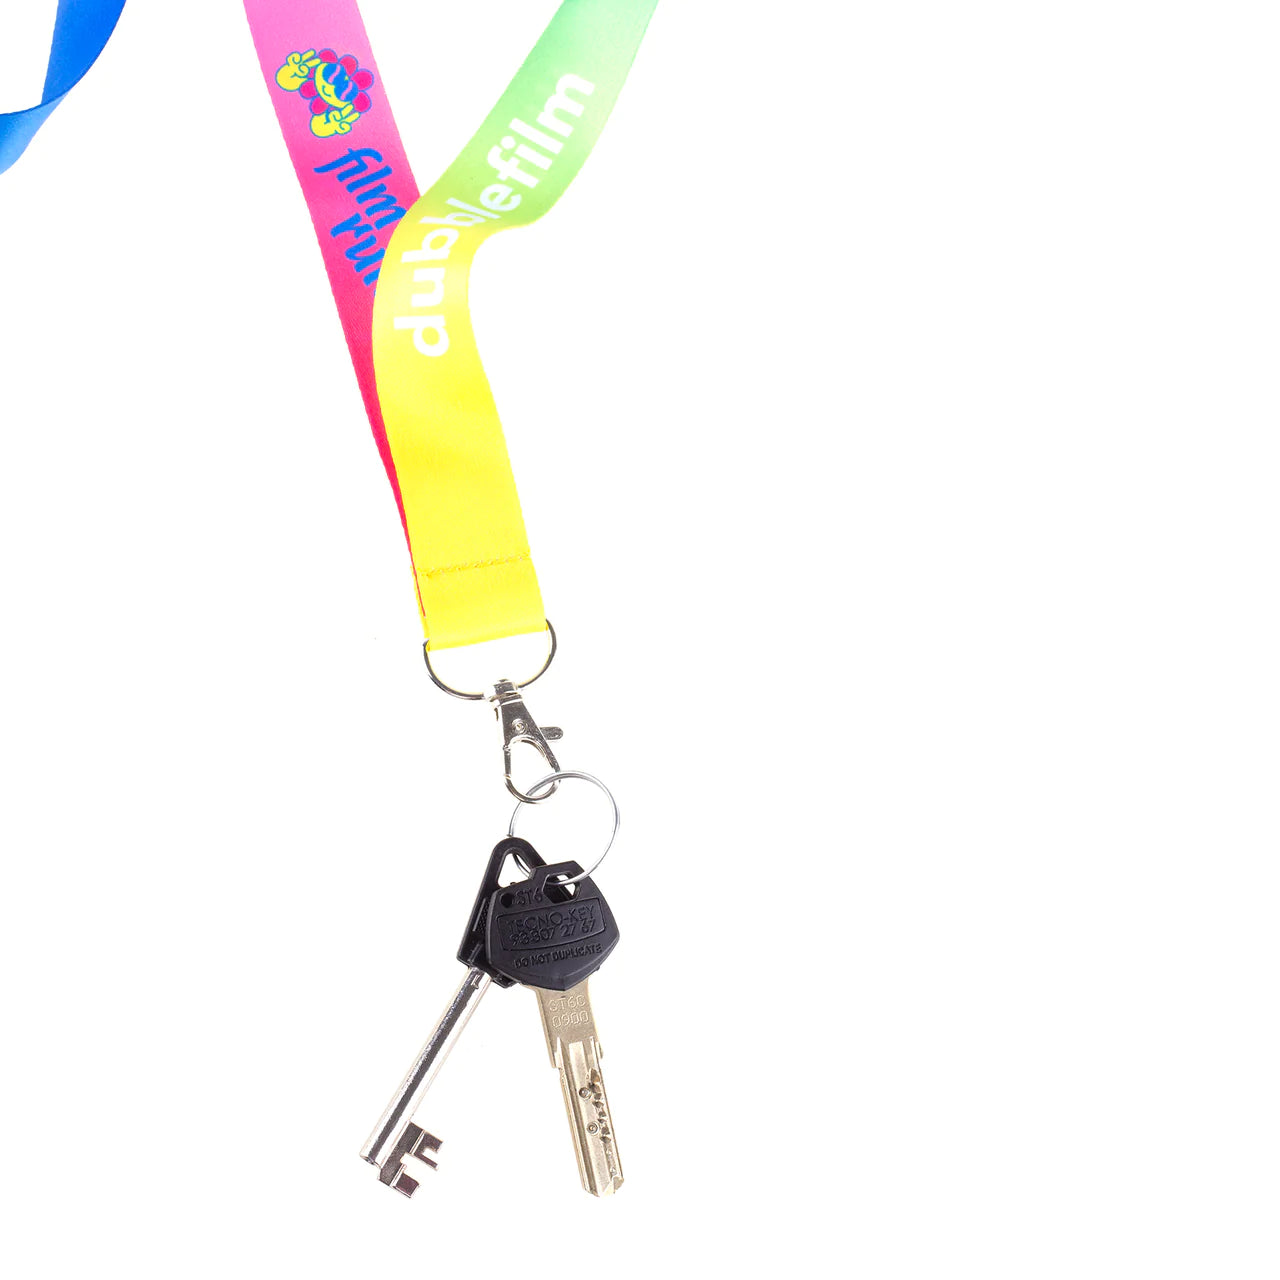 Dubblefilm neck strap with keys attached